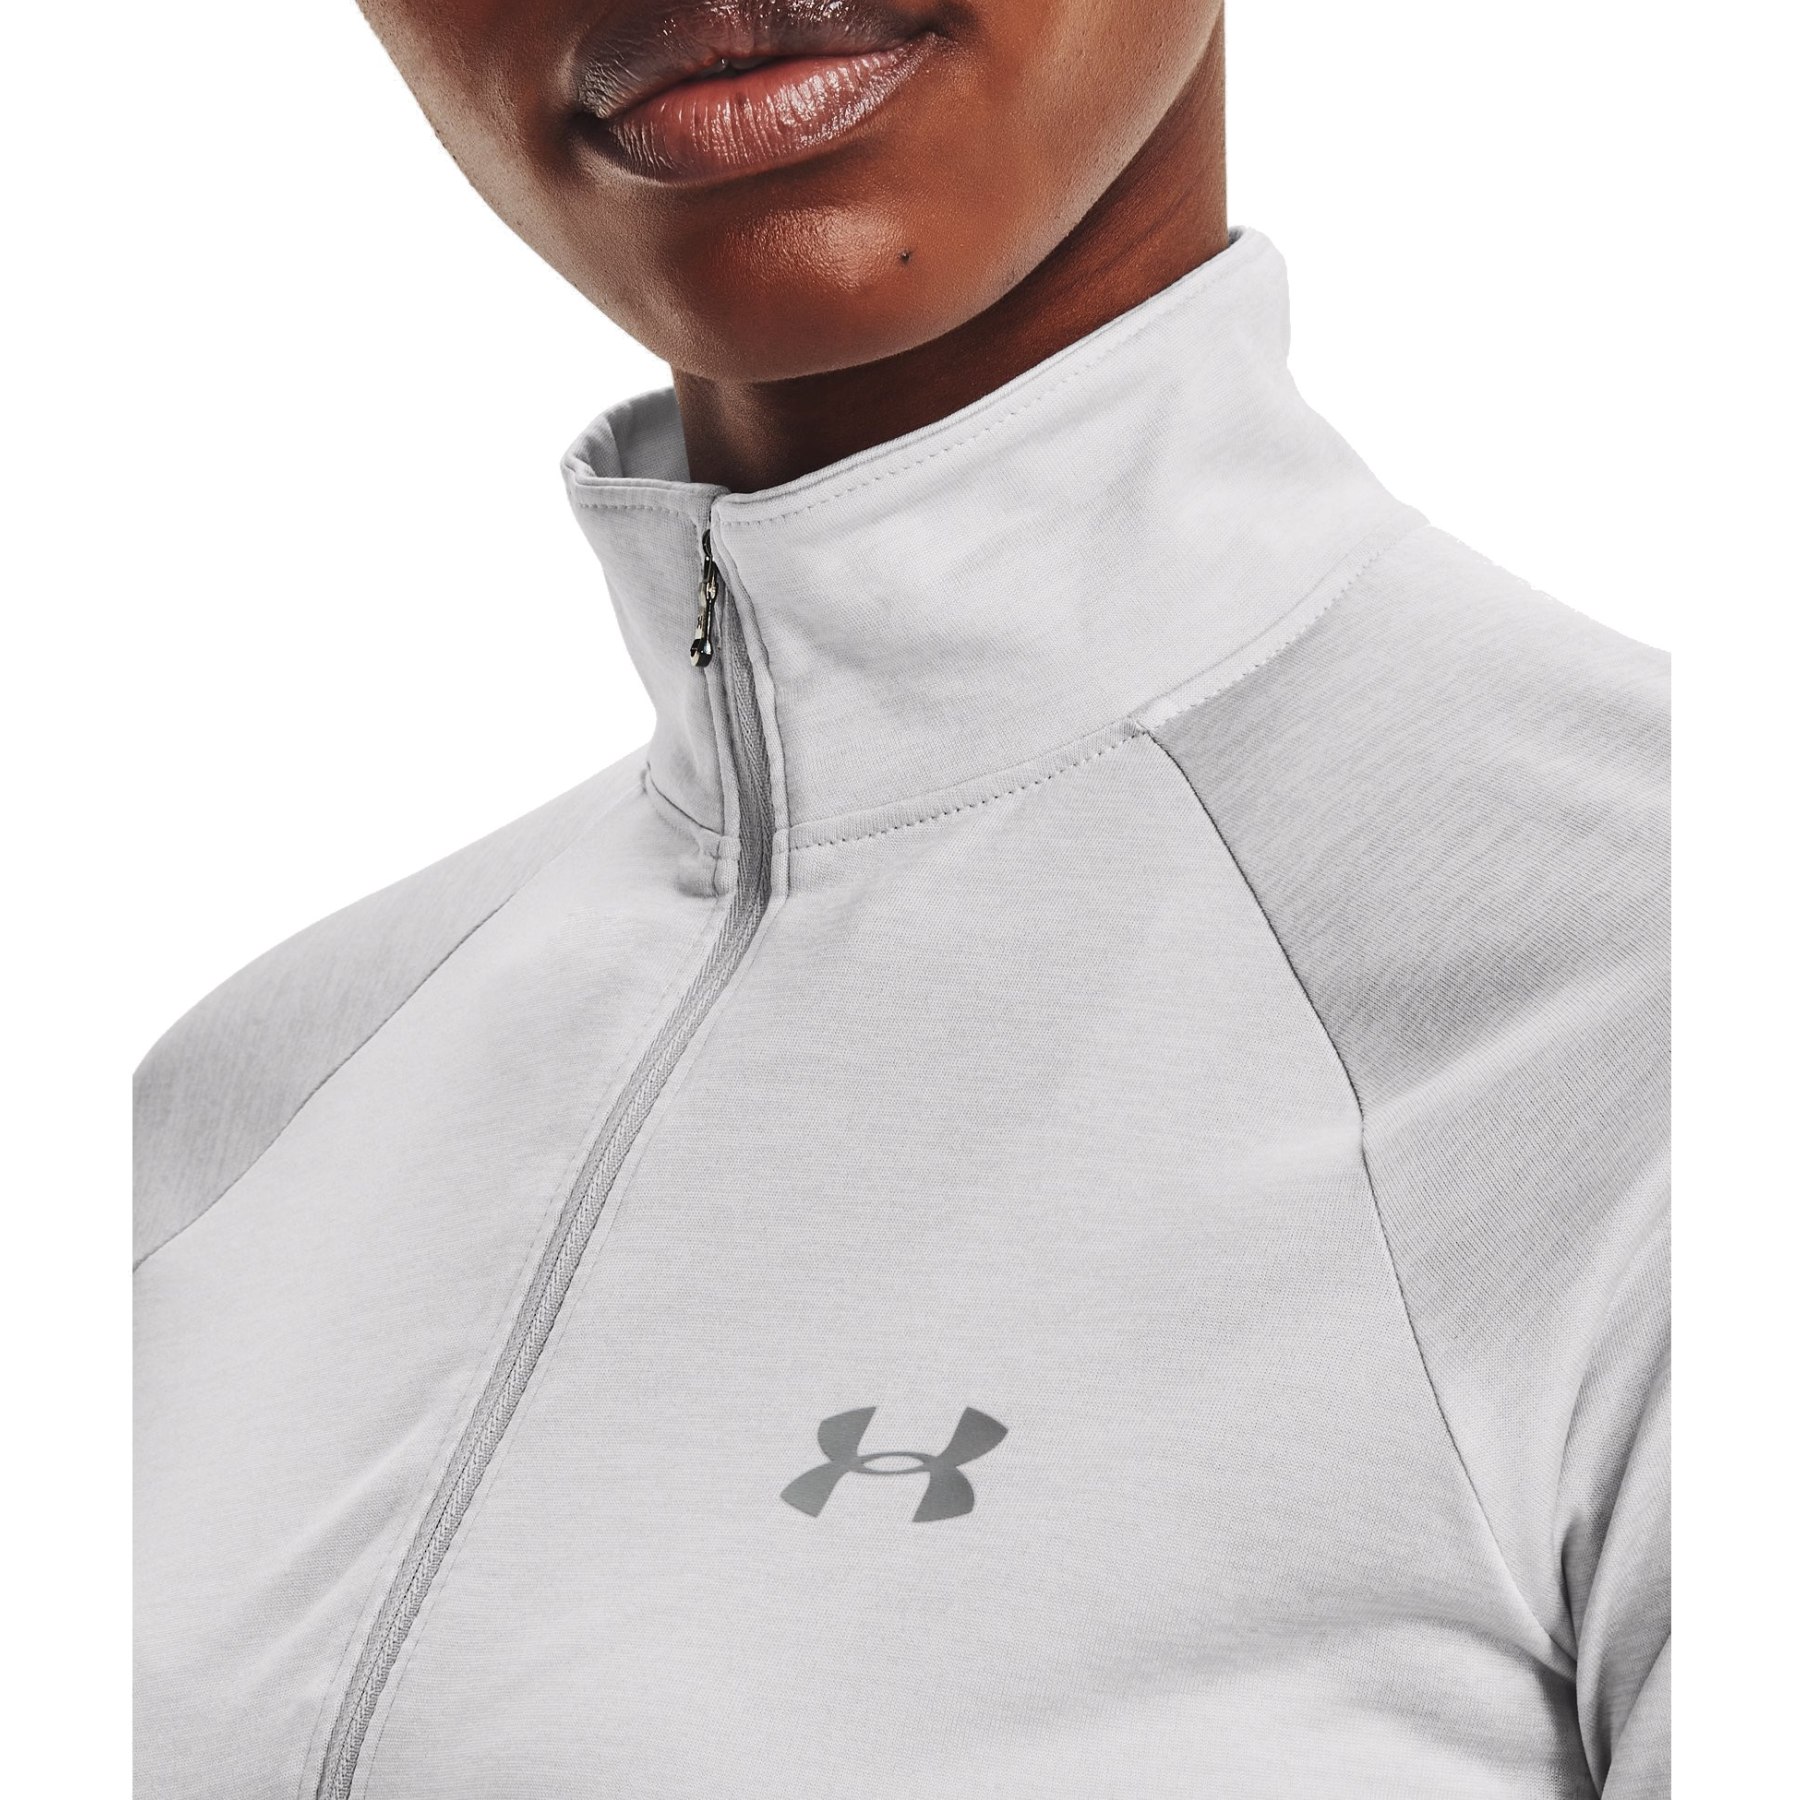 Under Armour UA Tech Twist Half-Zip Pullover for Ladies